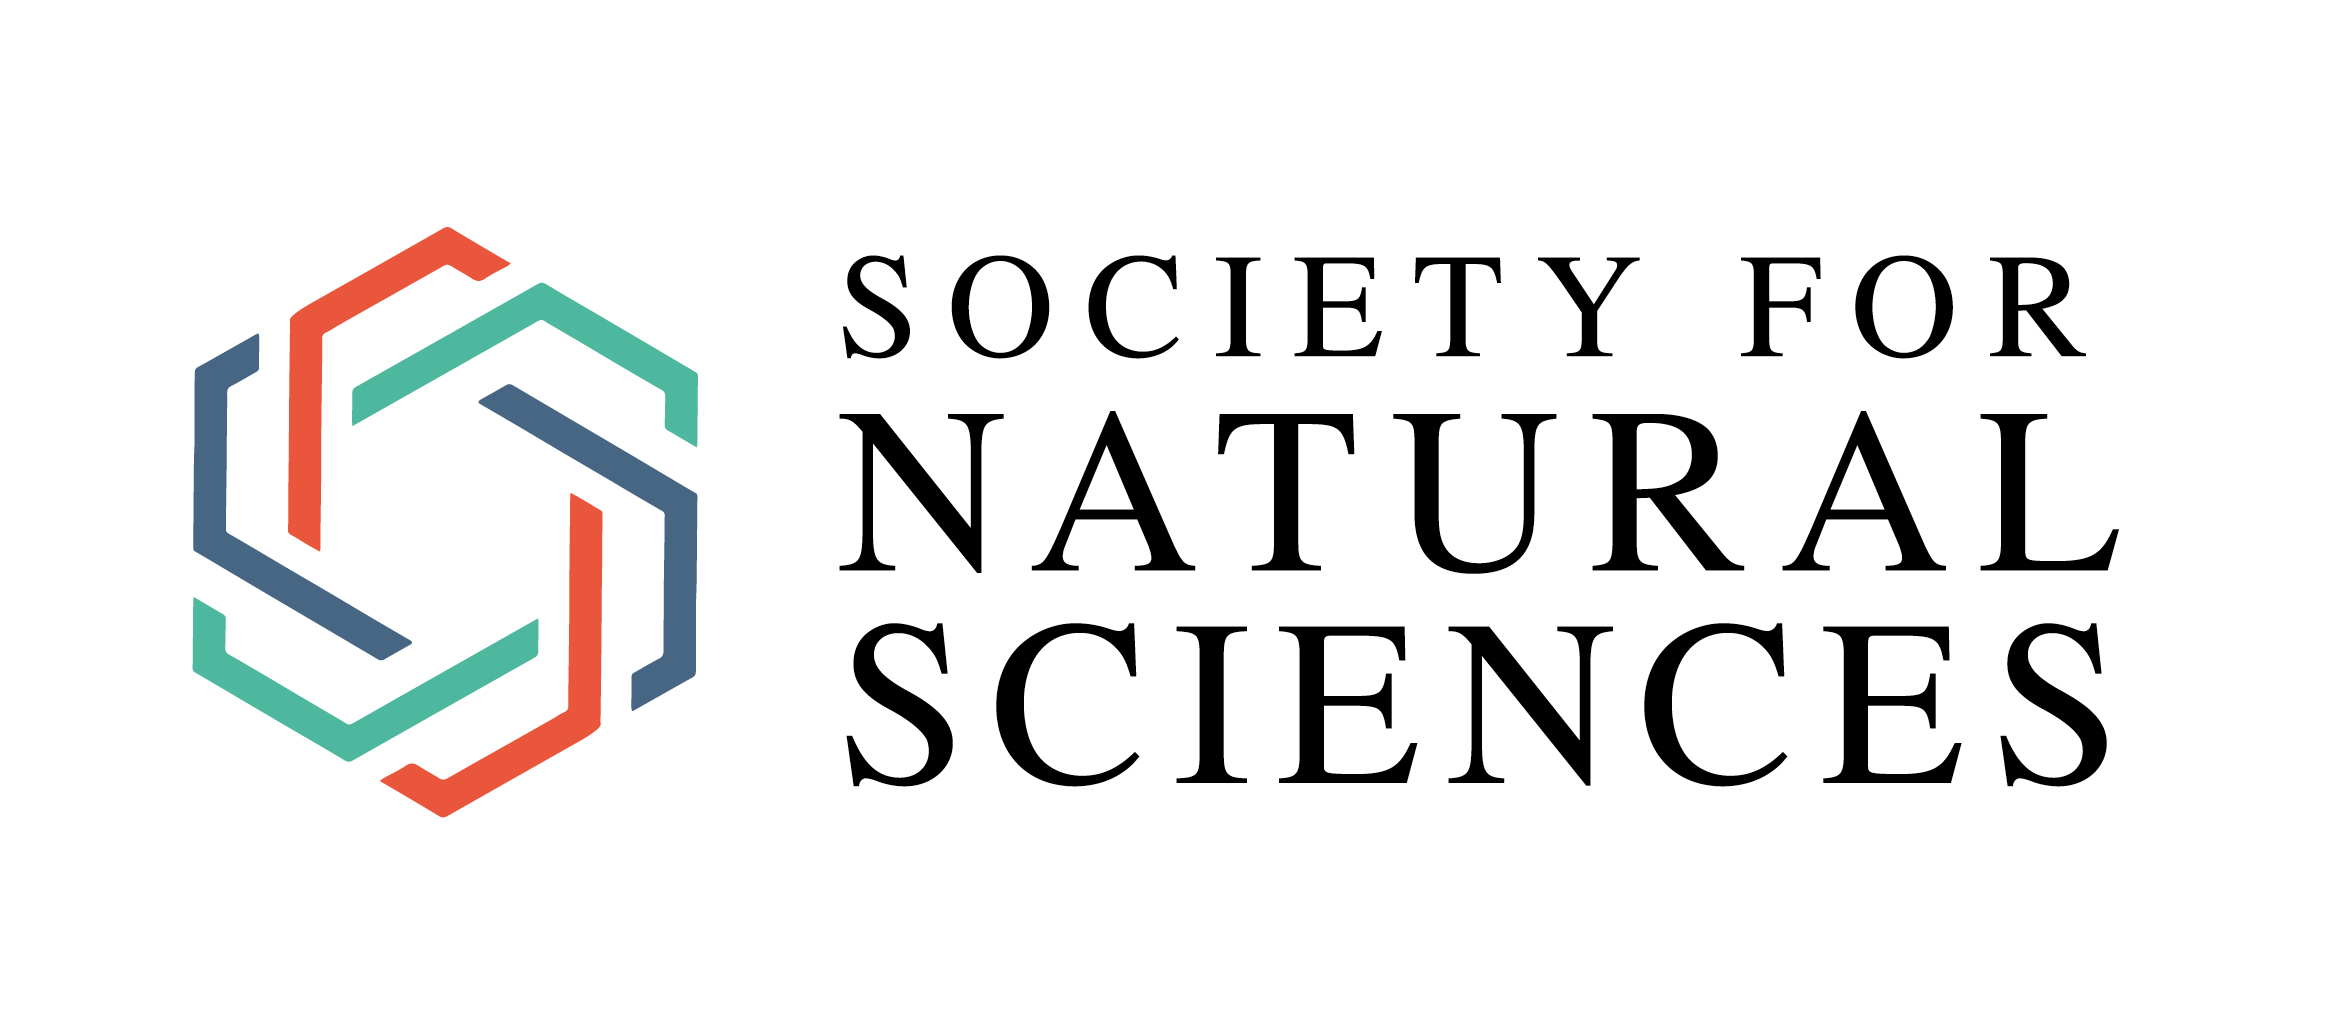 Society for Natural Sciences logo